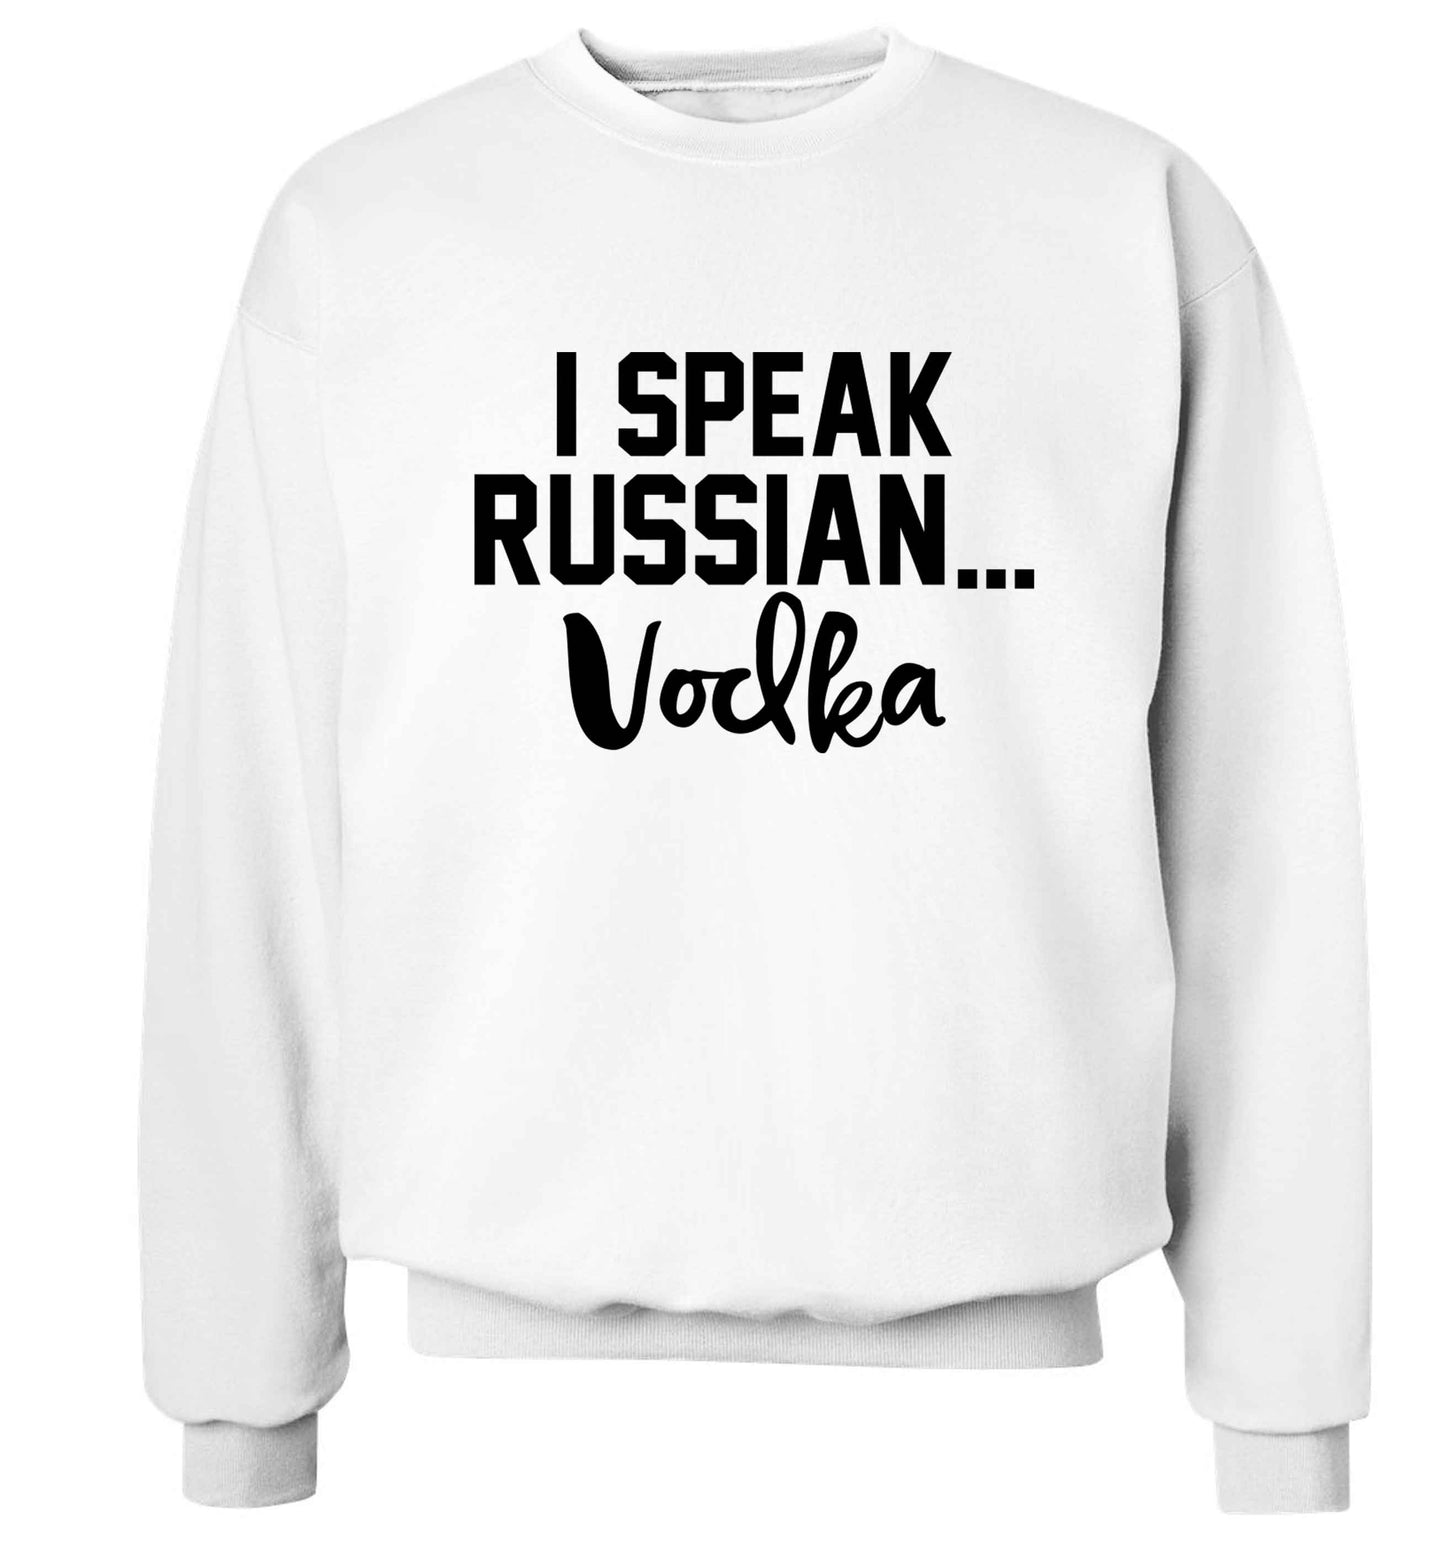 I speak russian...vodka Adult's unisex white Sweater 2XL